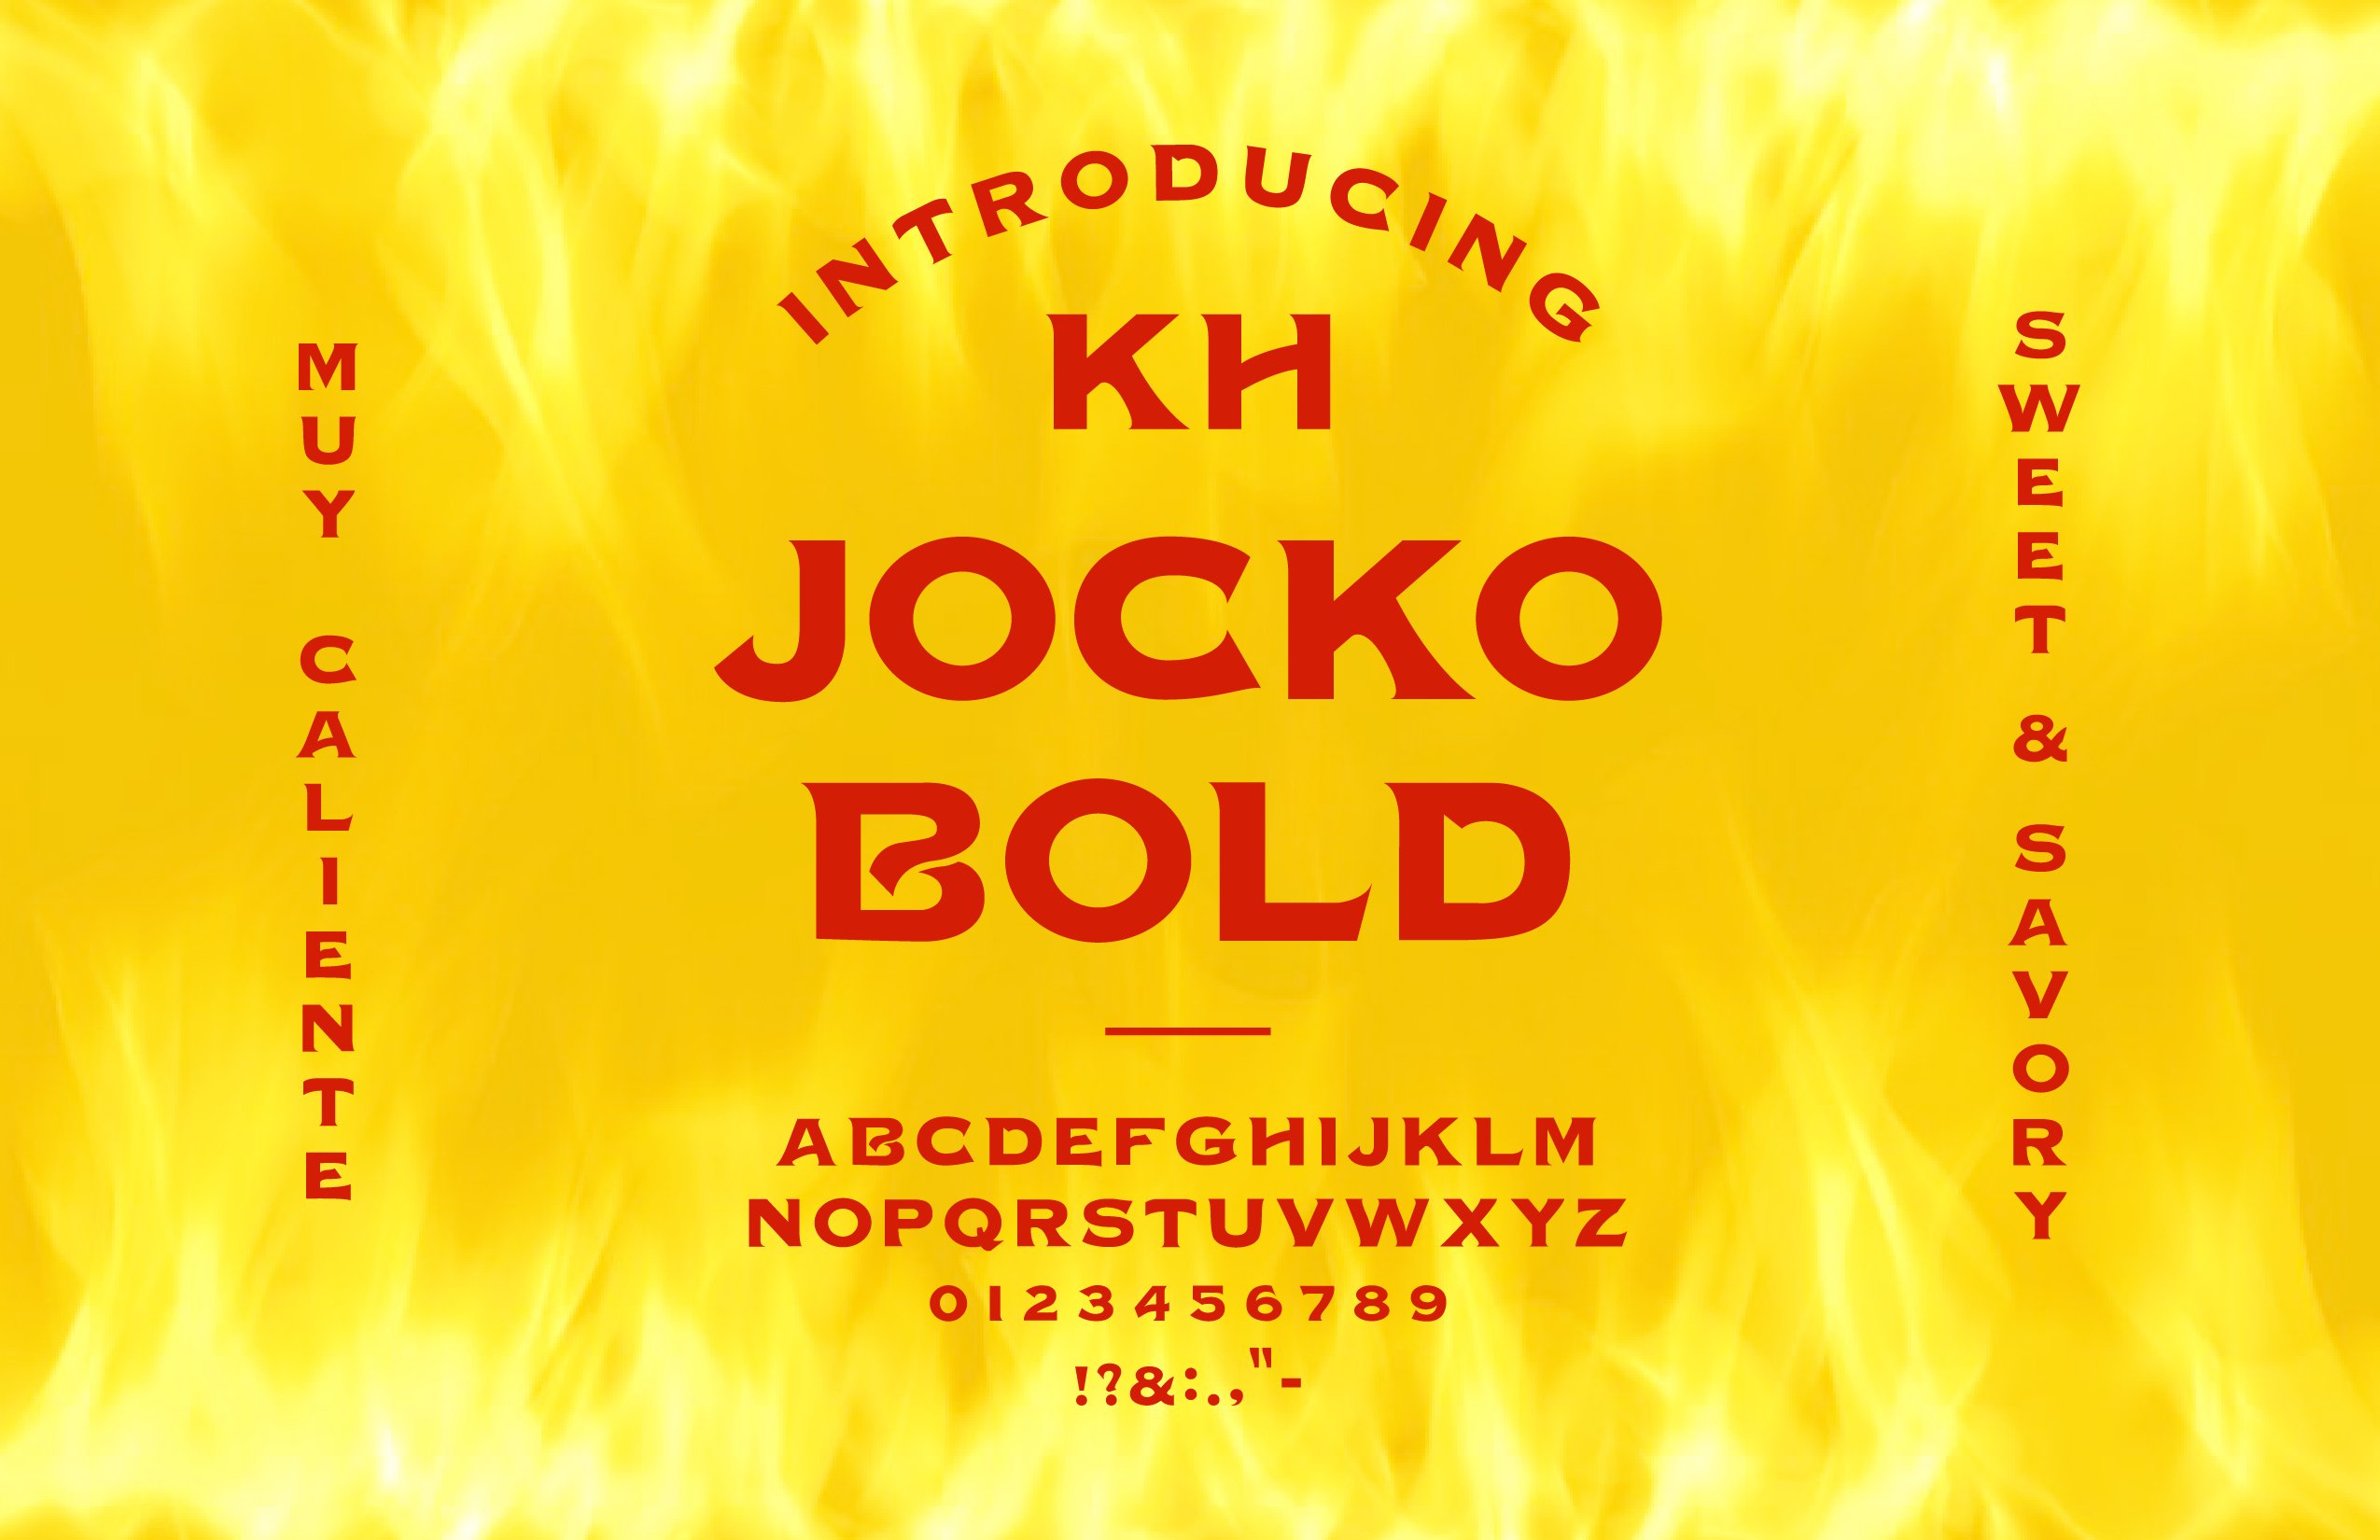 KH JOCKO BOLD cover image.